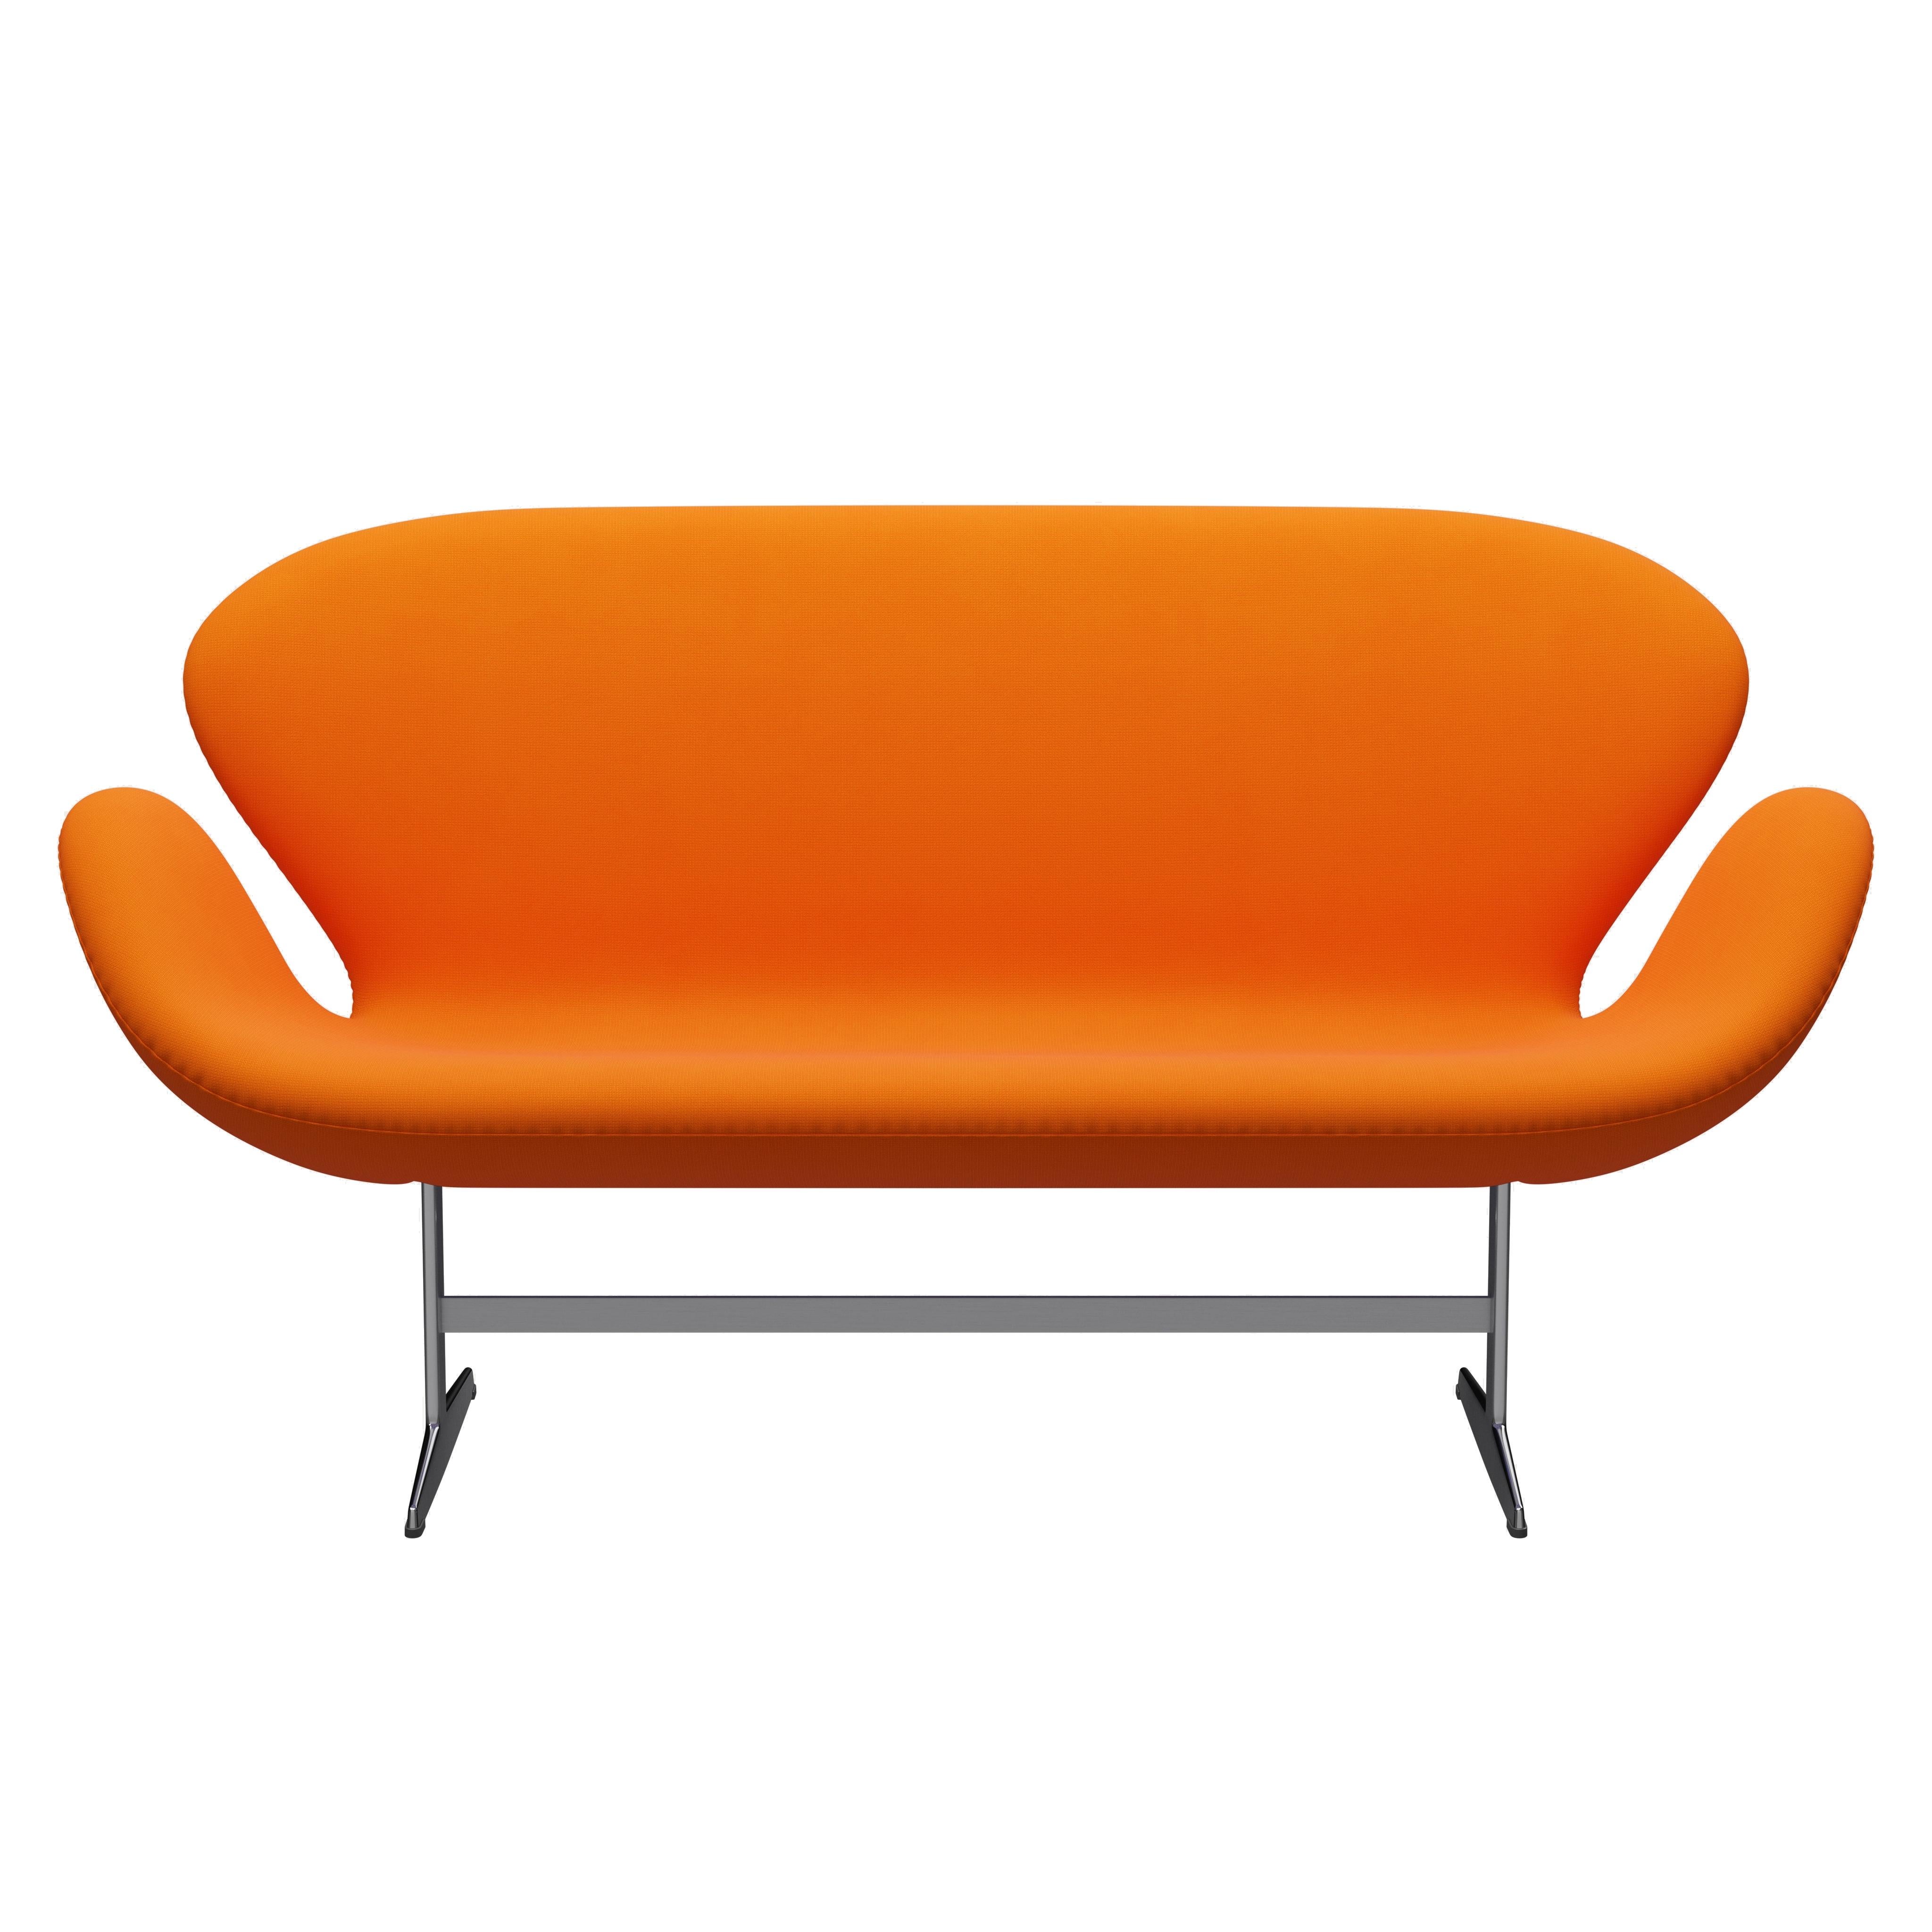 Metal Arne Jacobsen 'Swan' Sofa for Fritz Hansen in Fabric Upholstery (Cat. 1) For Sale